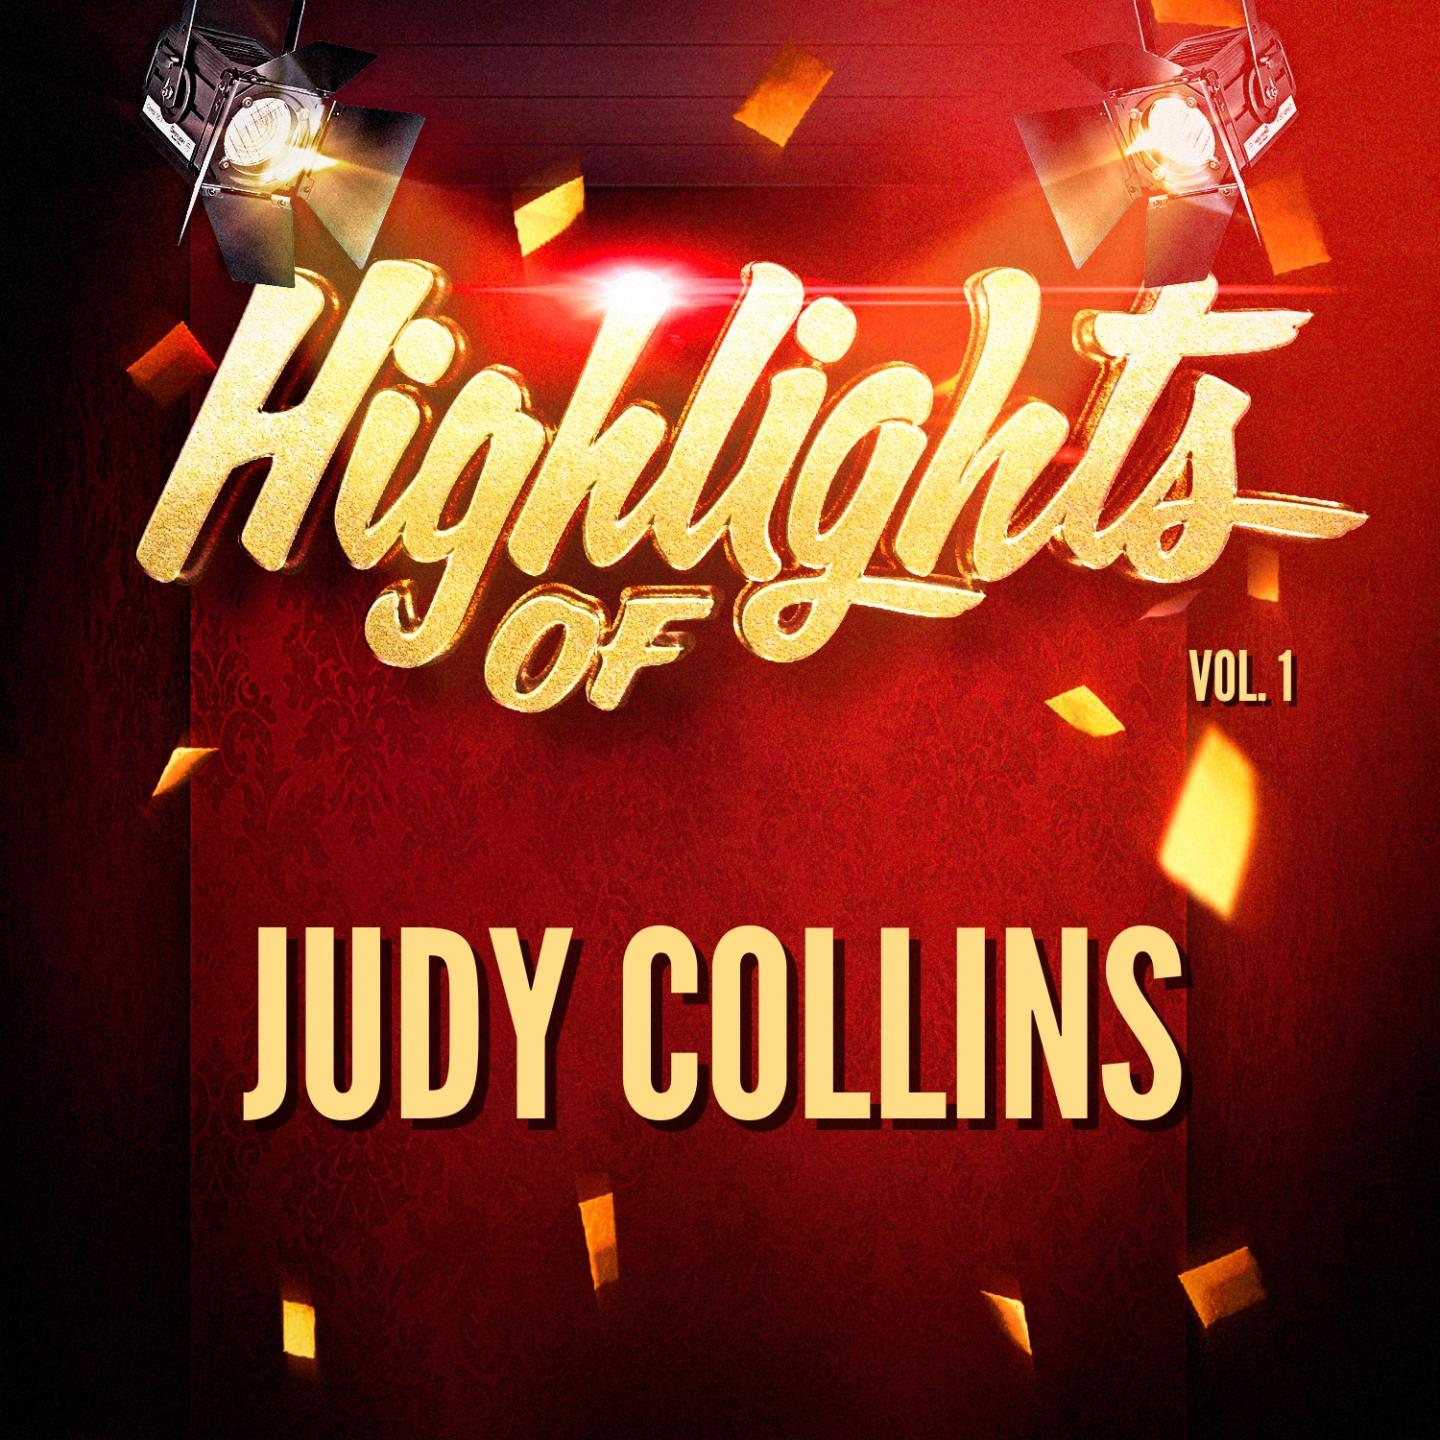 Highlights of Judy Collins, Vol. 1